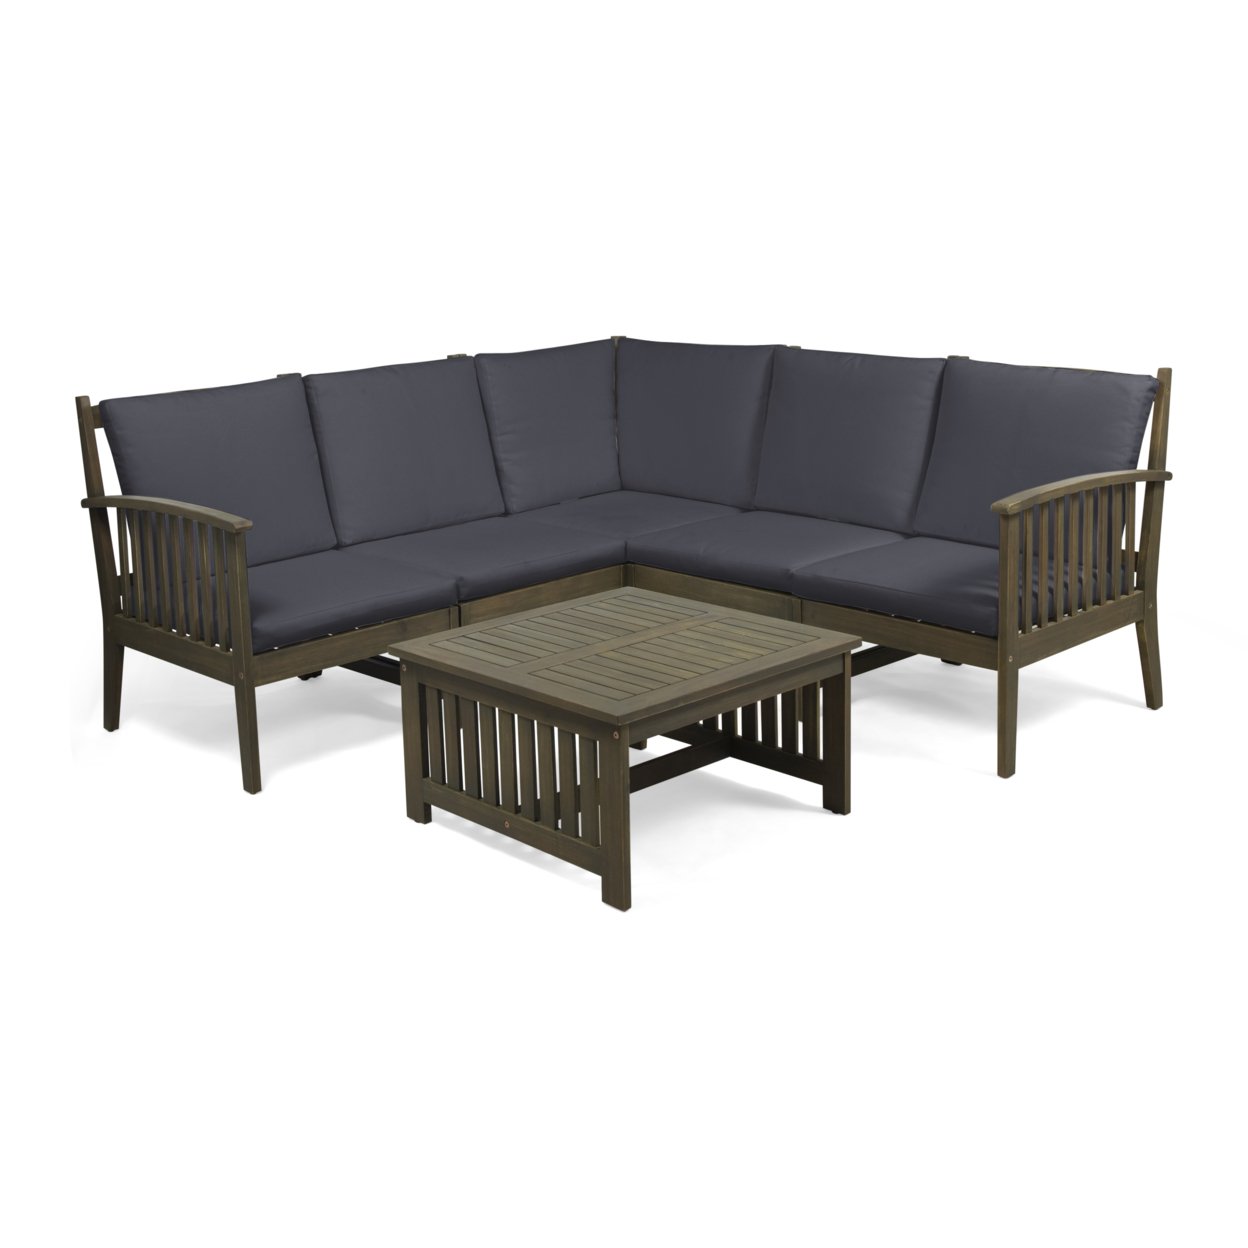 Maud Outdoor 5 Seater Acacia Wood Sofa Sectional Set - Gray, Dark Gray